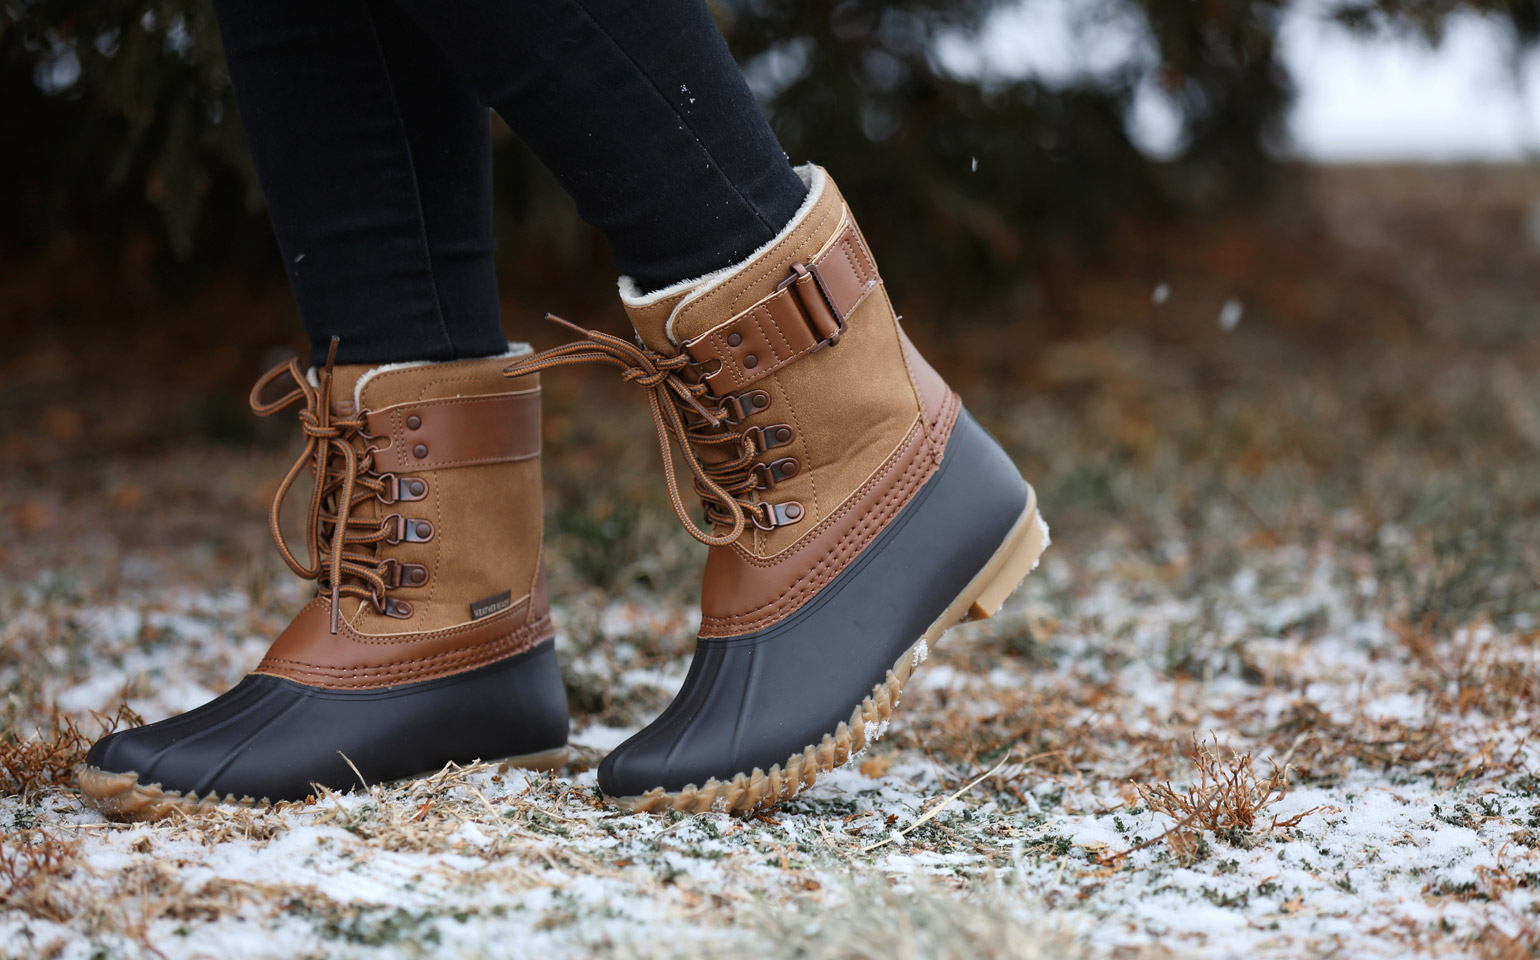 womens navy winter boots